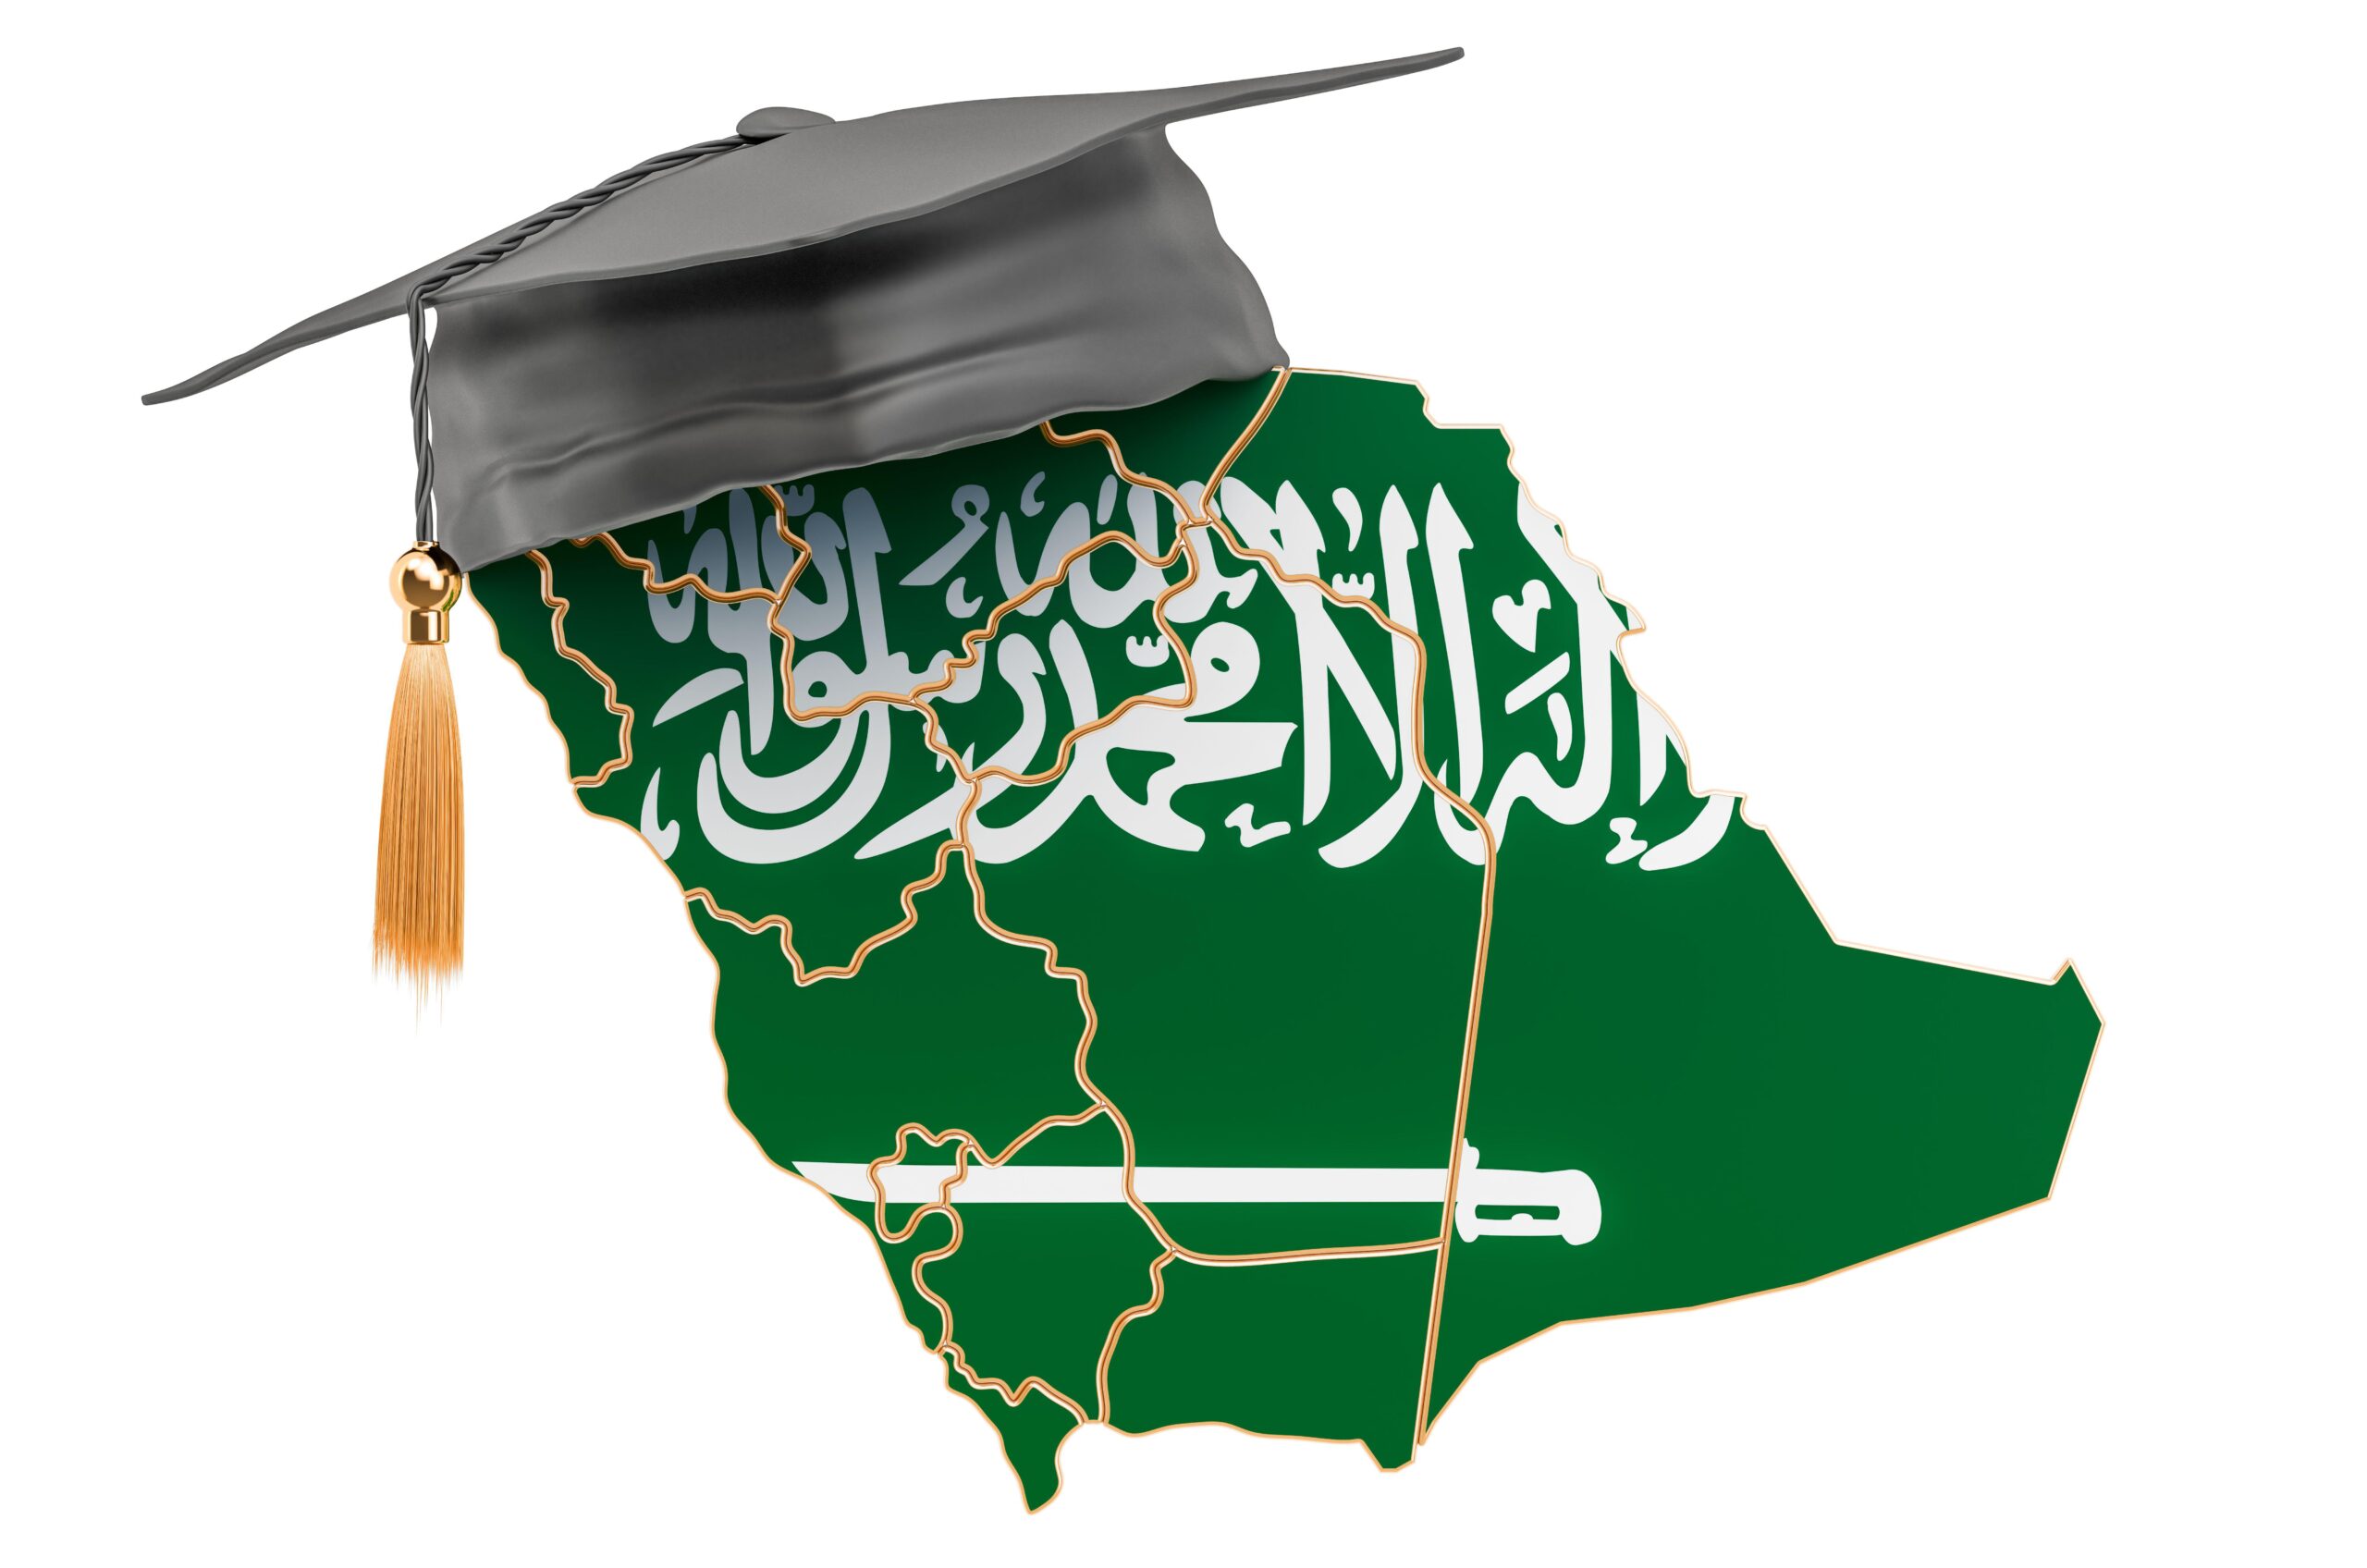 Saudi Arabia’s Tuwaiq Academy Opens Cybersecurity Bootcamp – Source: www.darkreading.com